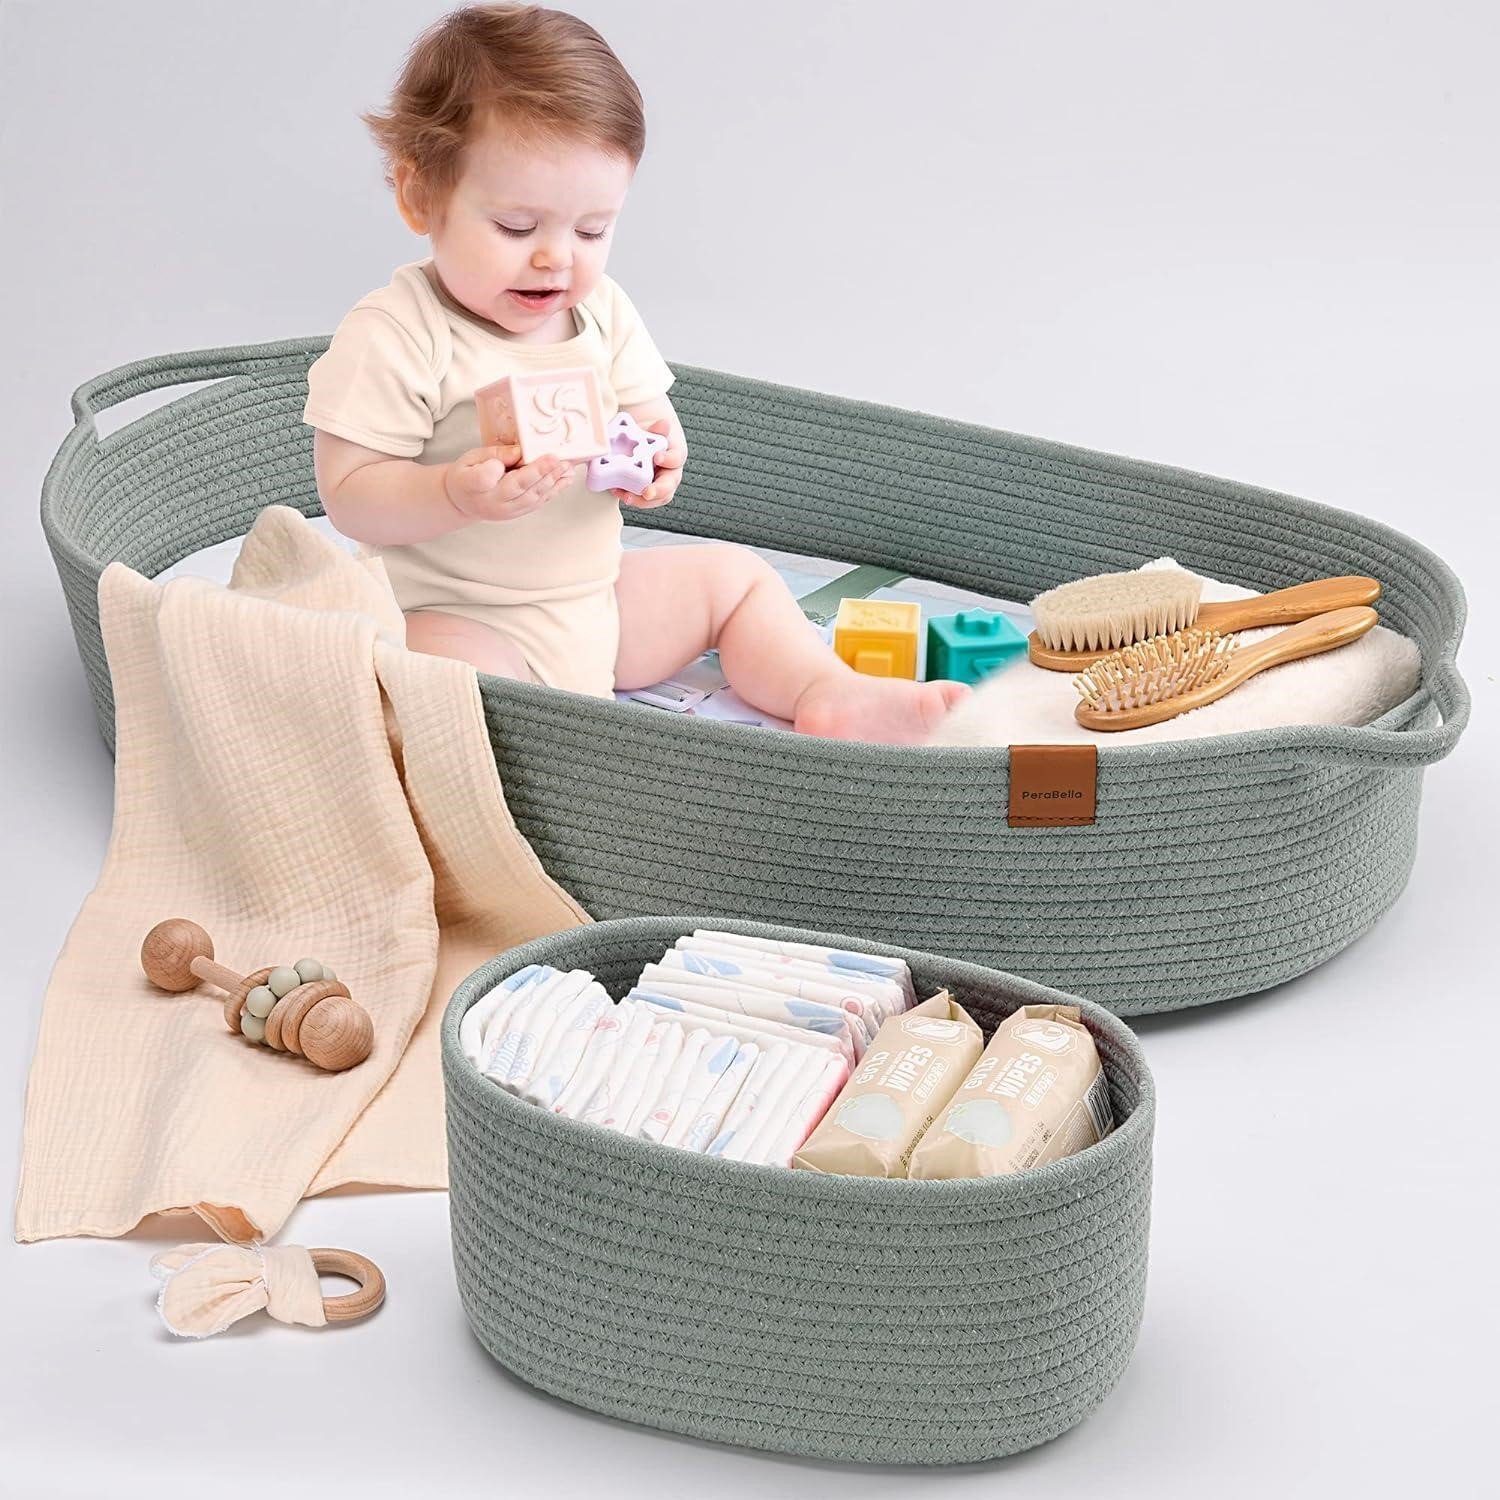 Unisex Baby Diaper Changing Basket